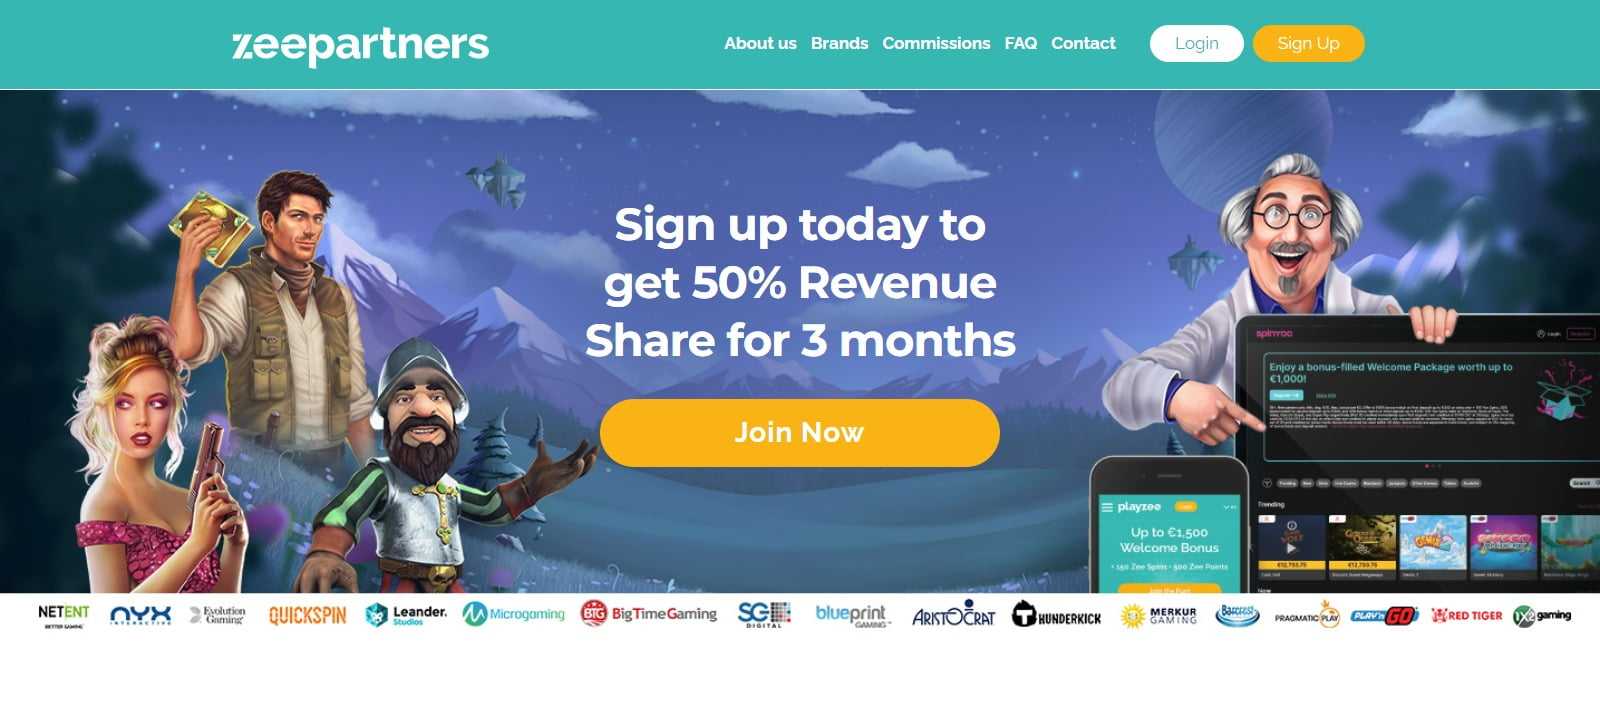 ZeePartners Affiliates Program Review: 50% Revshare for the 1st 3 months